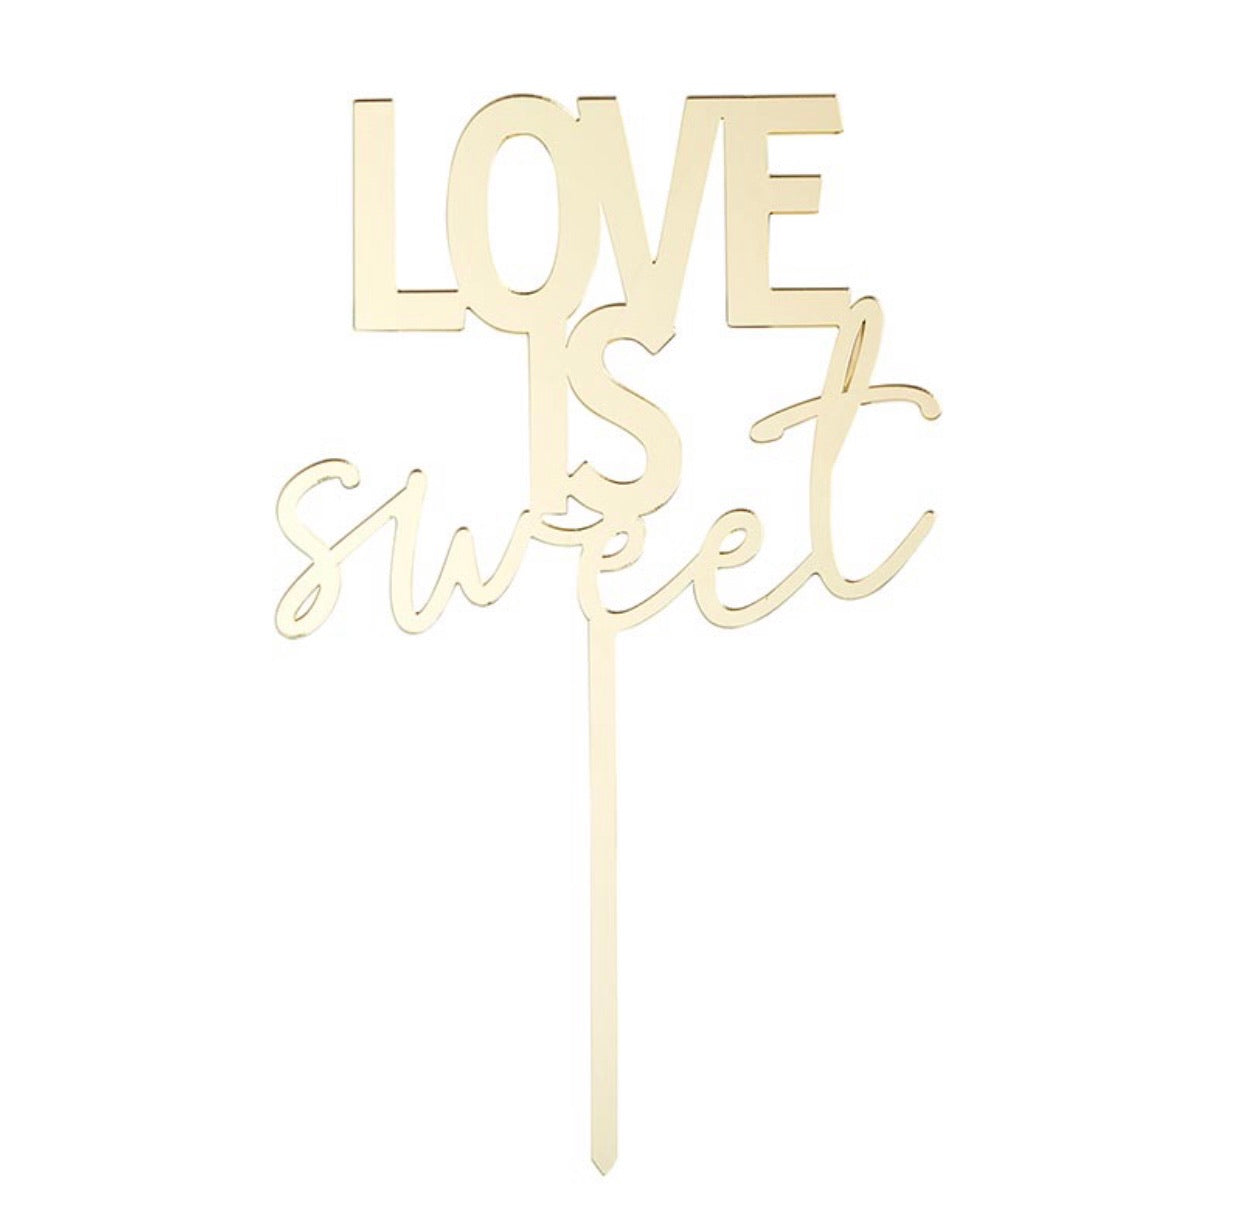 Love Is Sweet - Acrylic Cake Topper